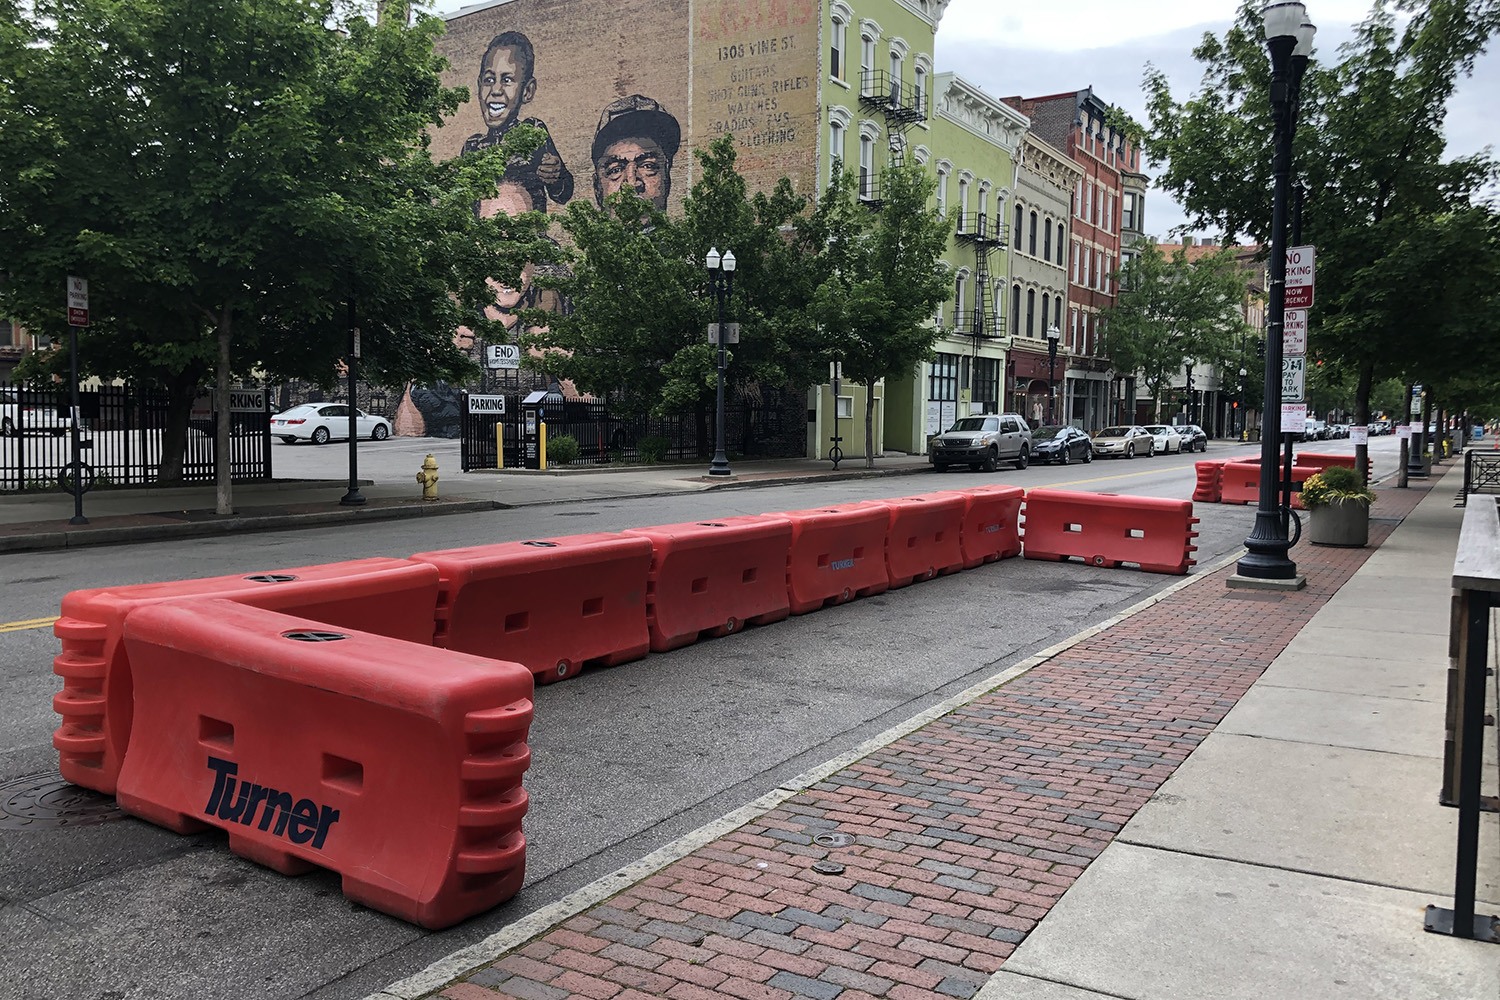 Barricaded outdoor seating for restaurants in Cincinnati, Ohio May 2020